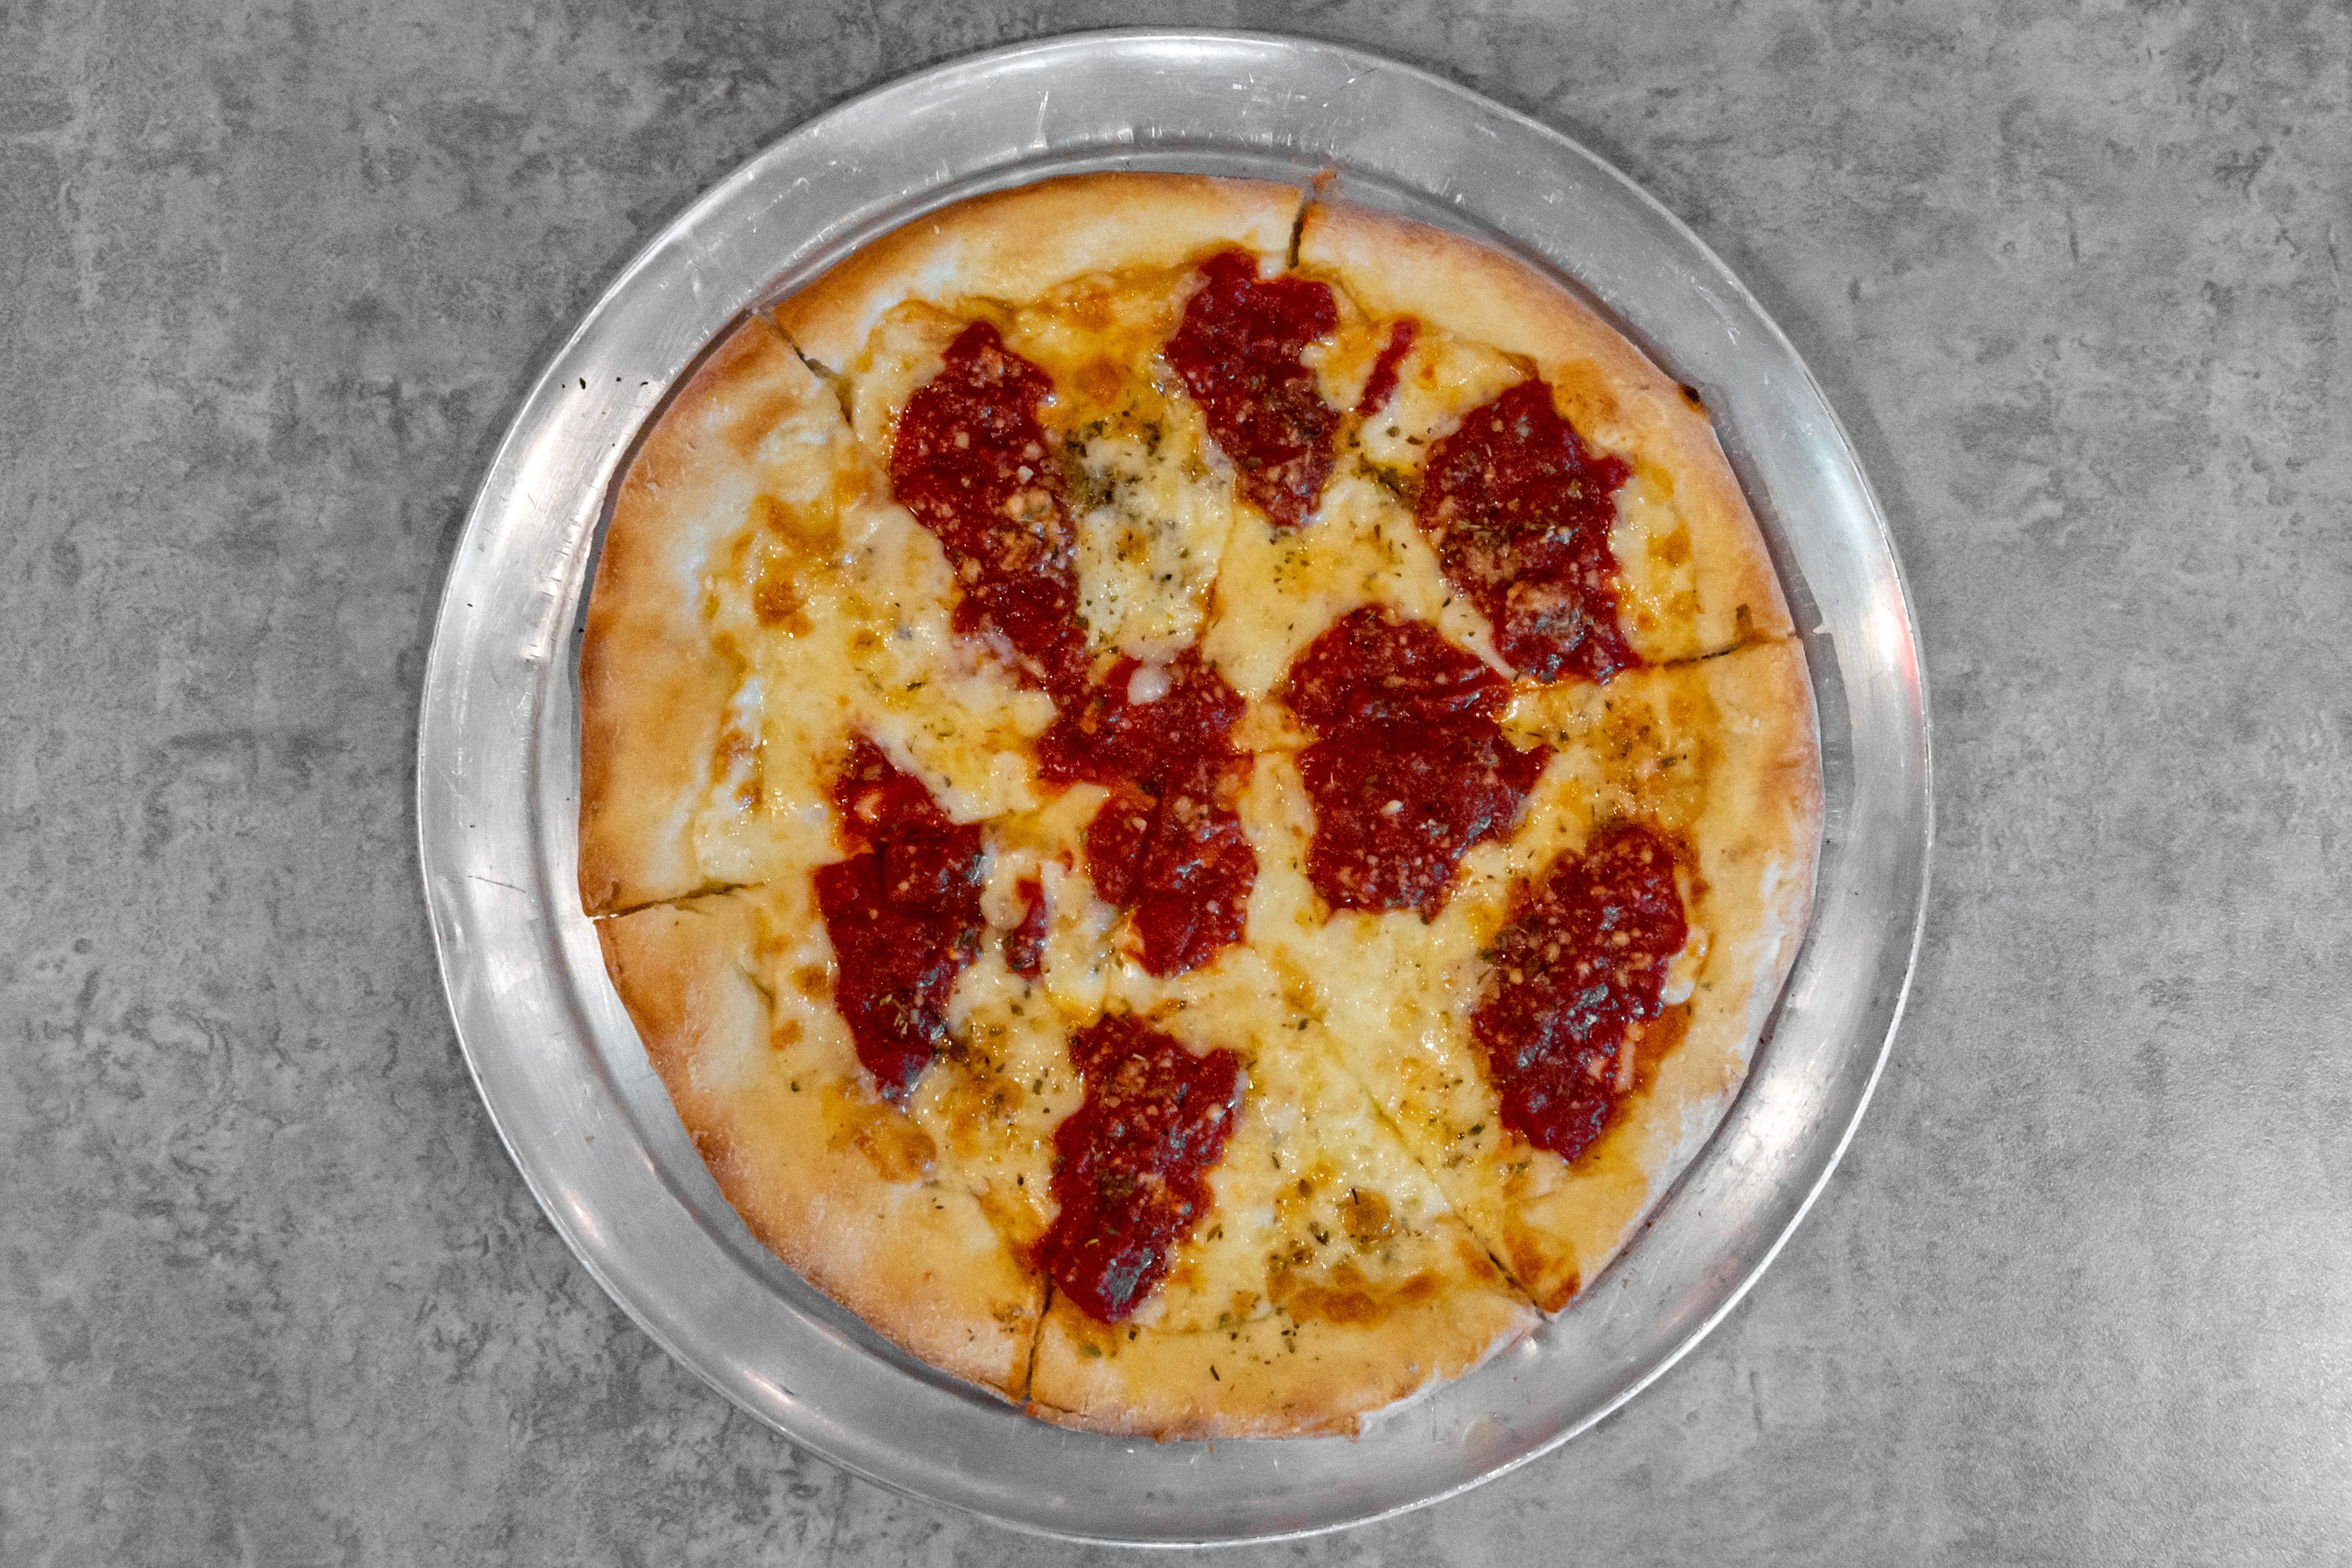 Brooklyn's Best Pizza & Pasta hero